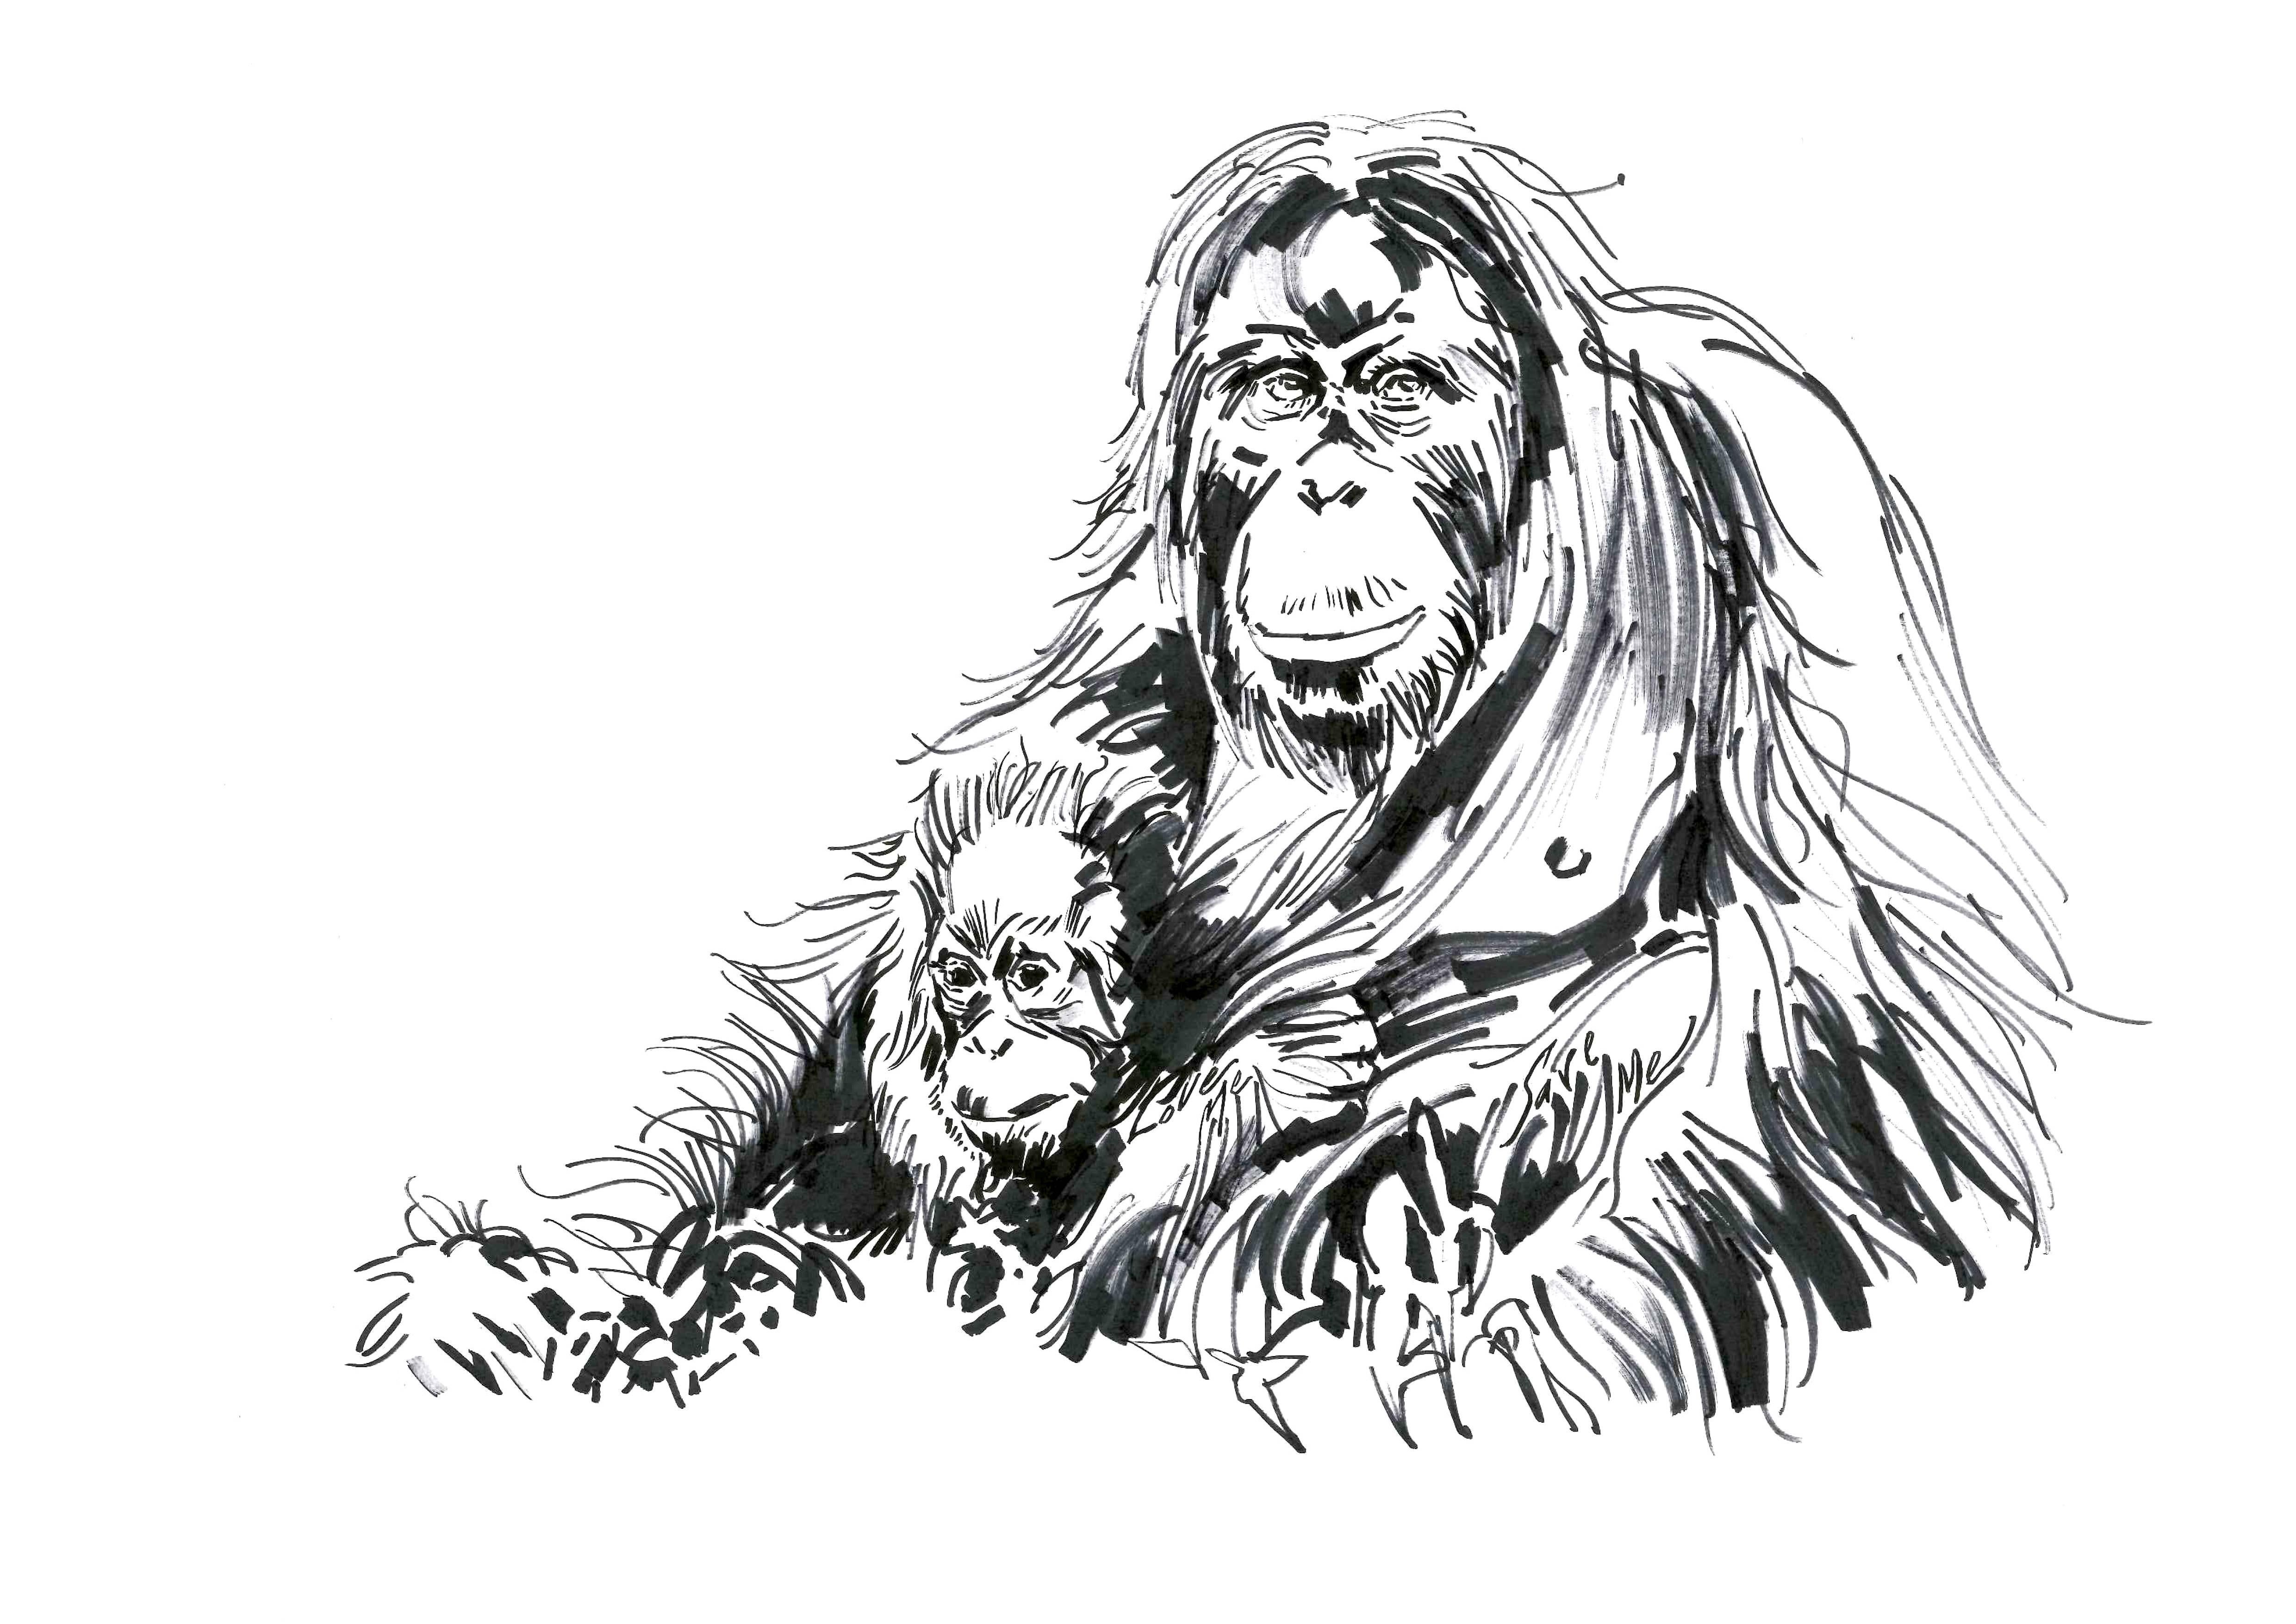 Metin Salih Animal Art - Love me Save Me, ORANGUTAN; portion of proceeds benefit WWF, signed & dedicated